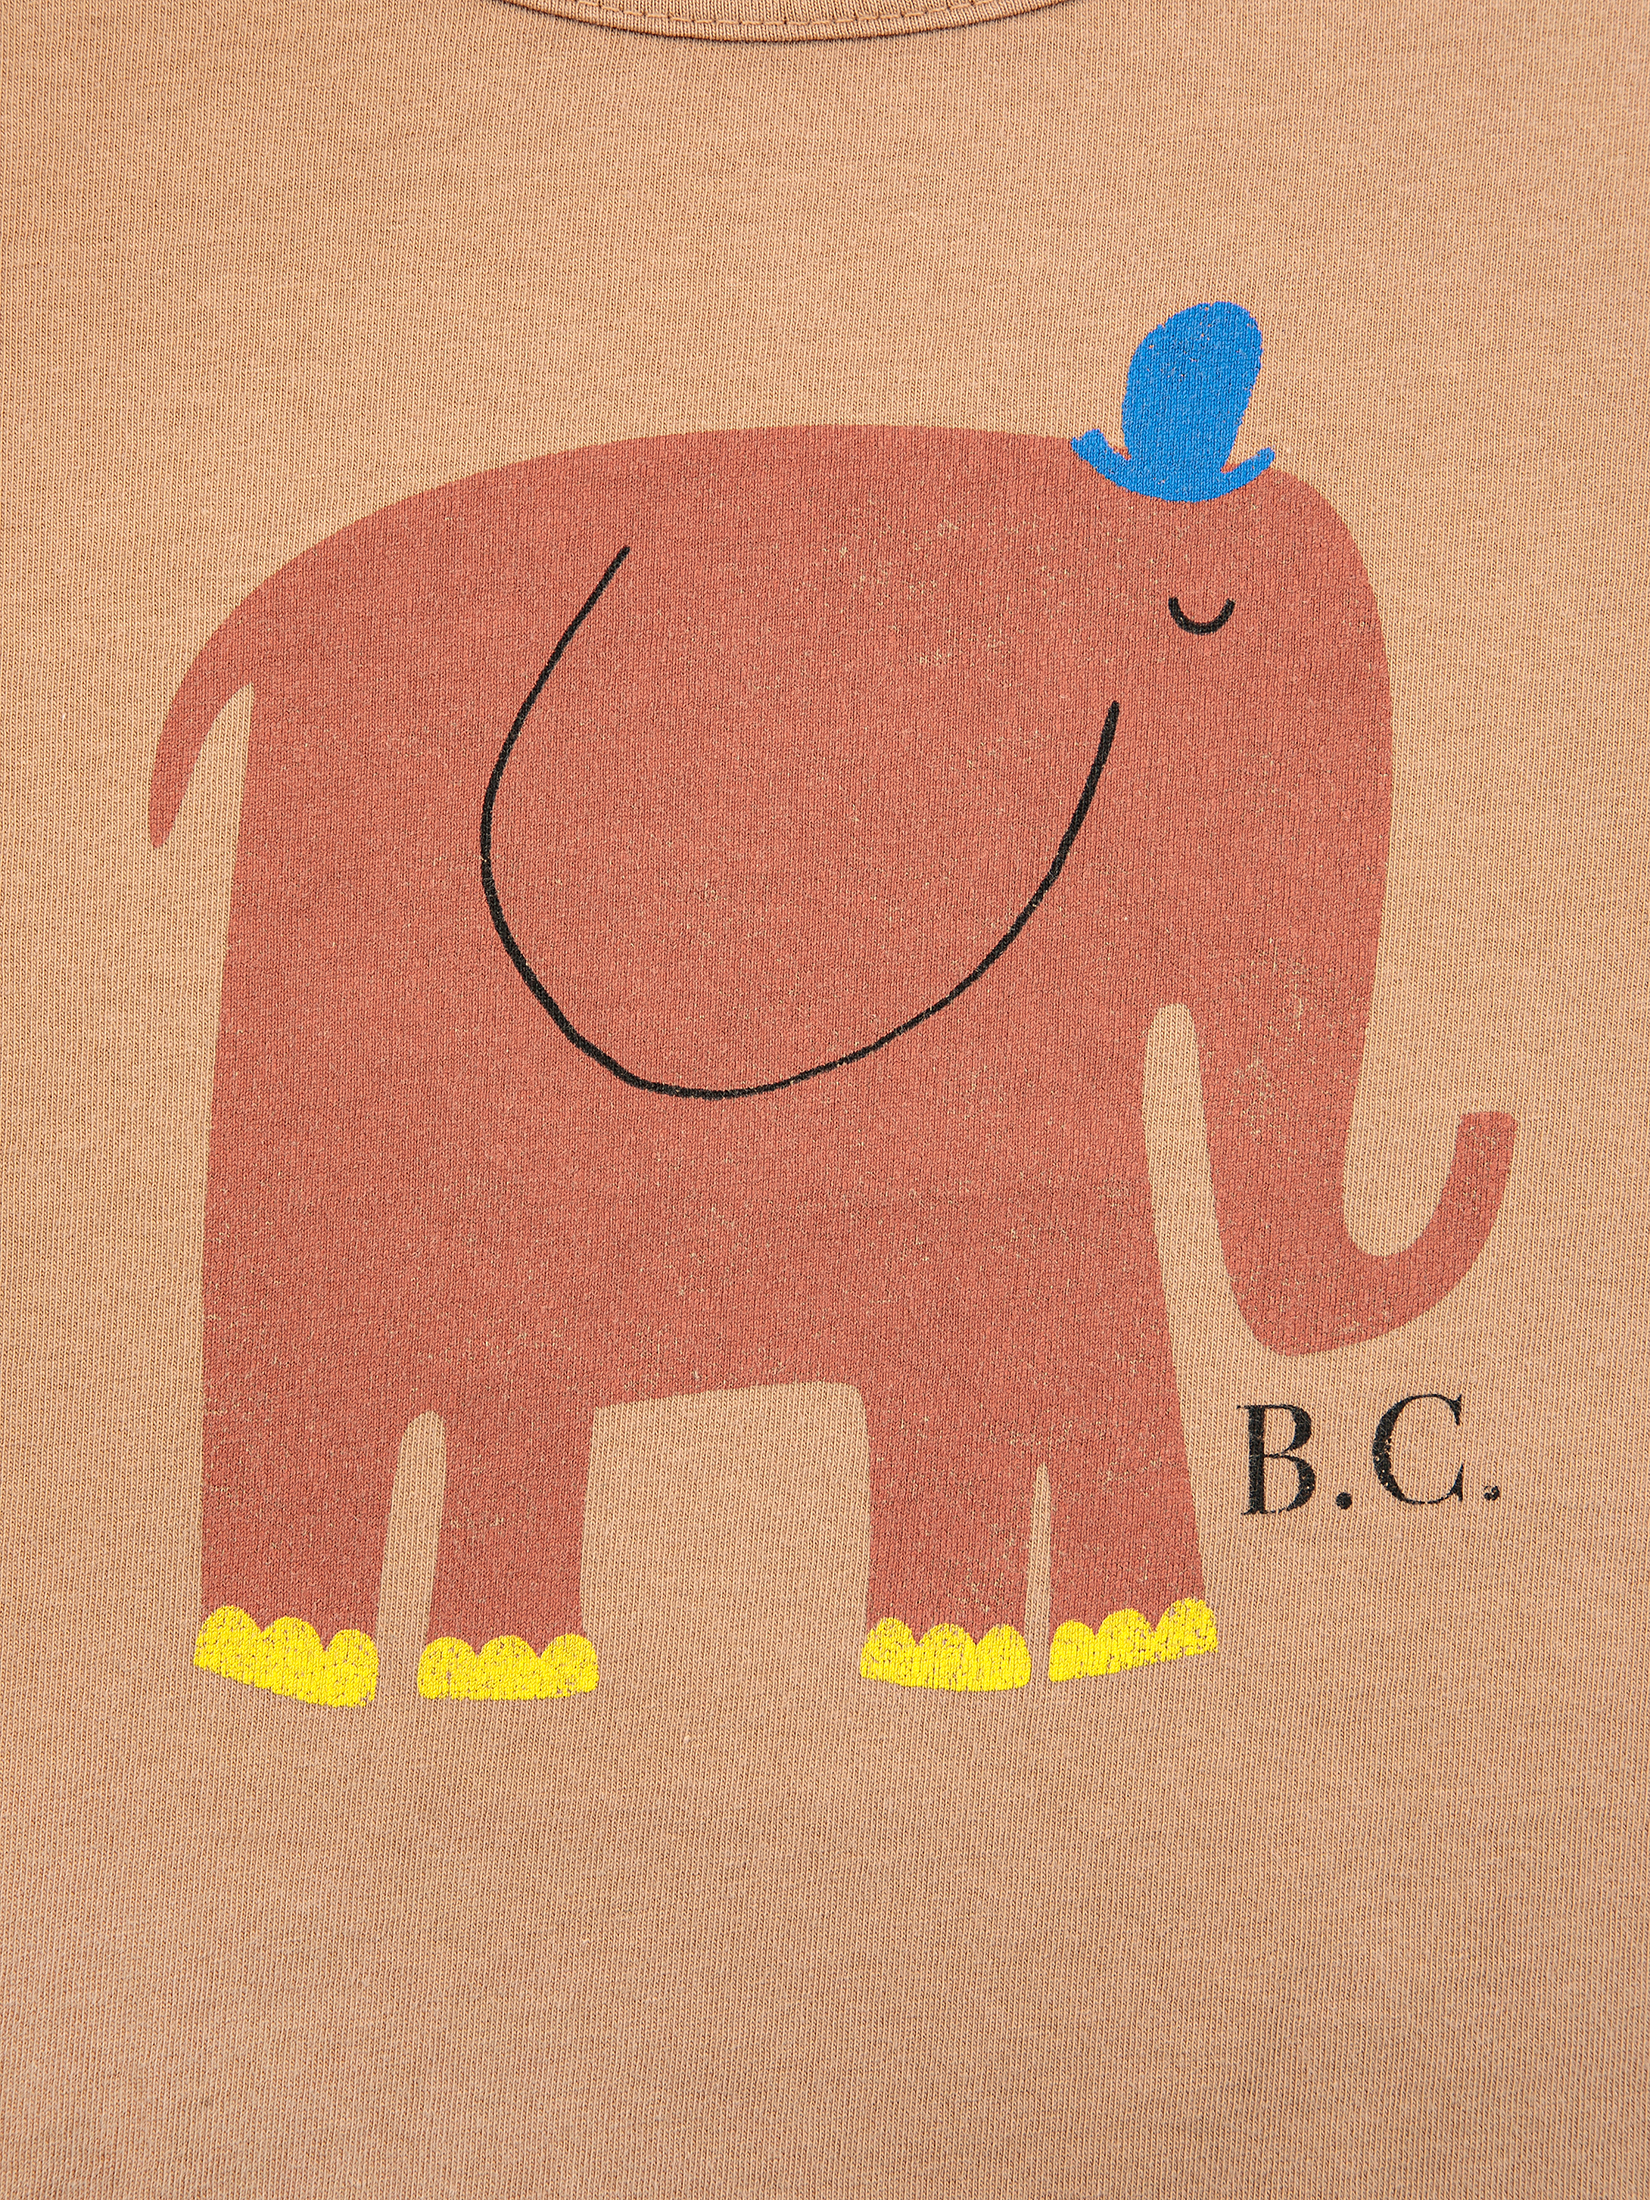 Bobo Choses Shirt 'The Elephant'